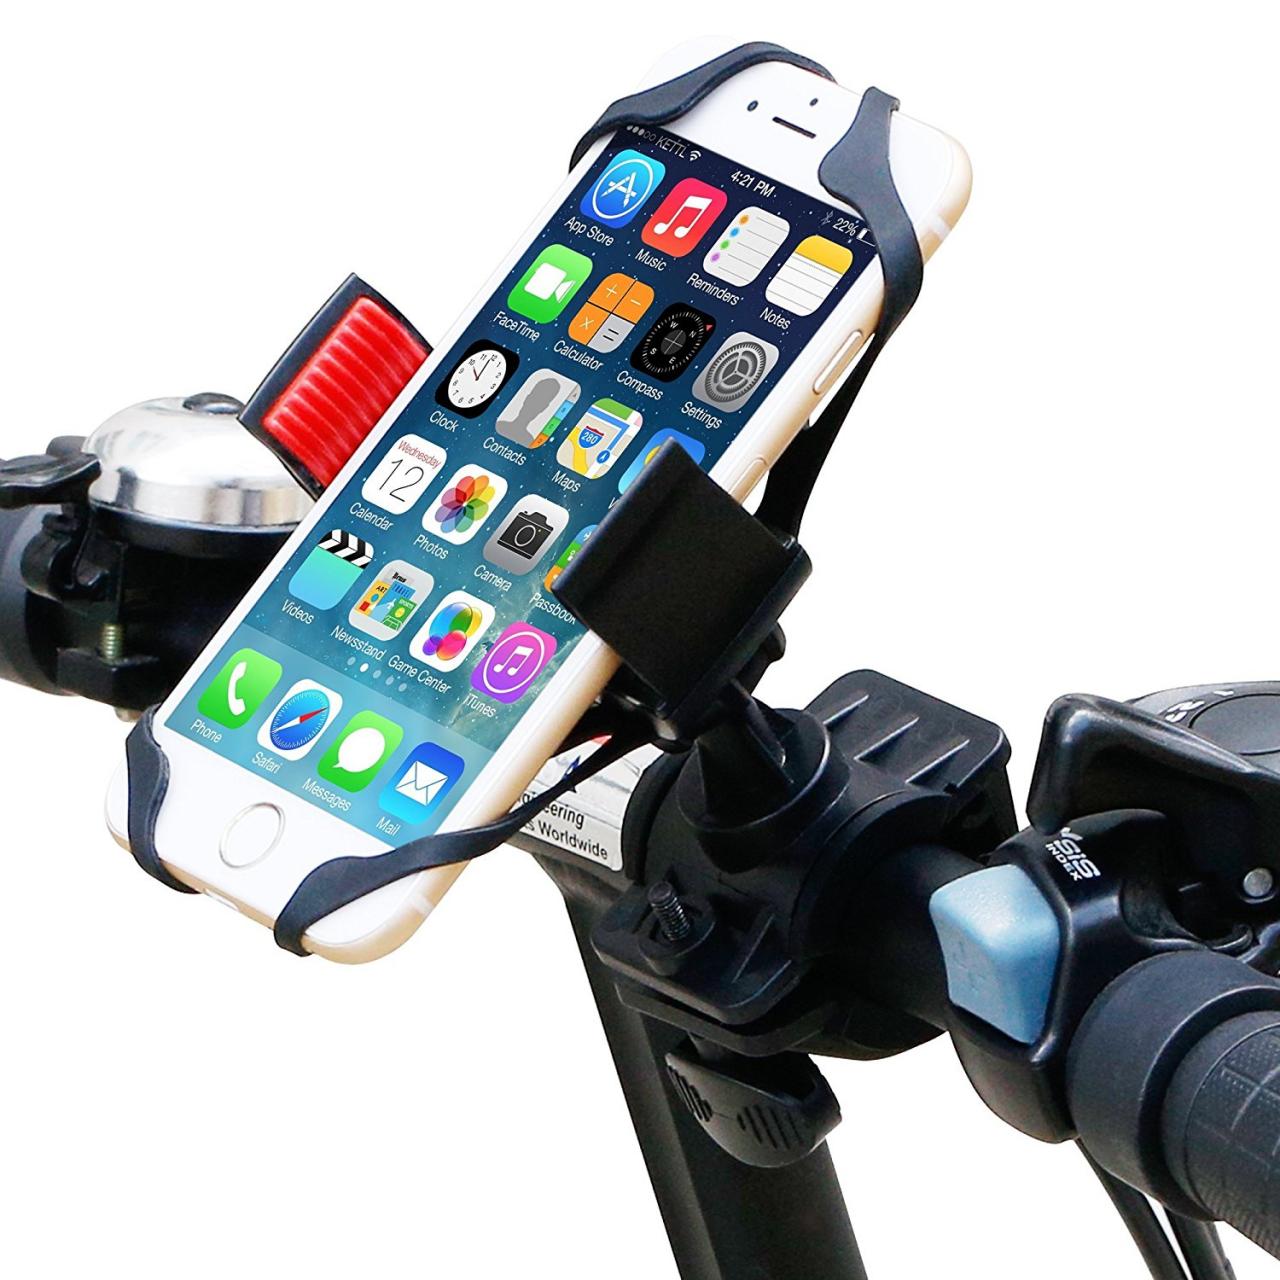 The IPOW Universal Bike Mount Securely Mounts Your Phone to Handlebars | SPY